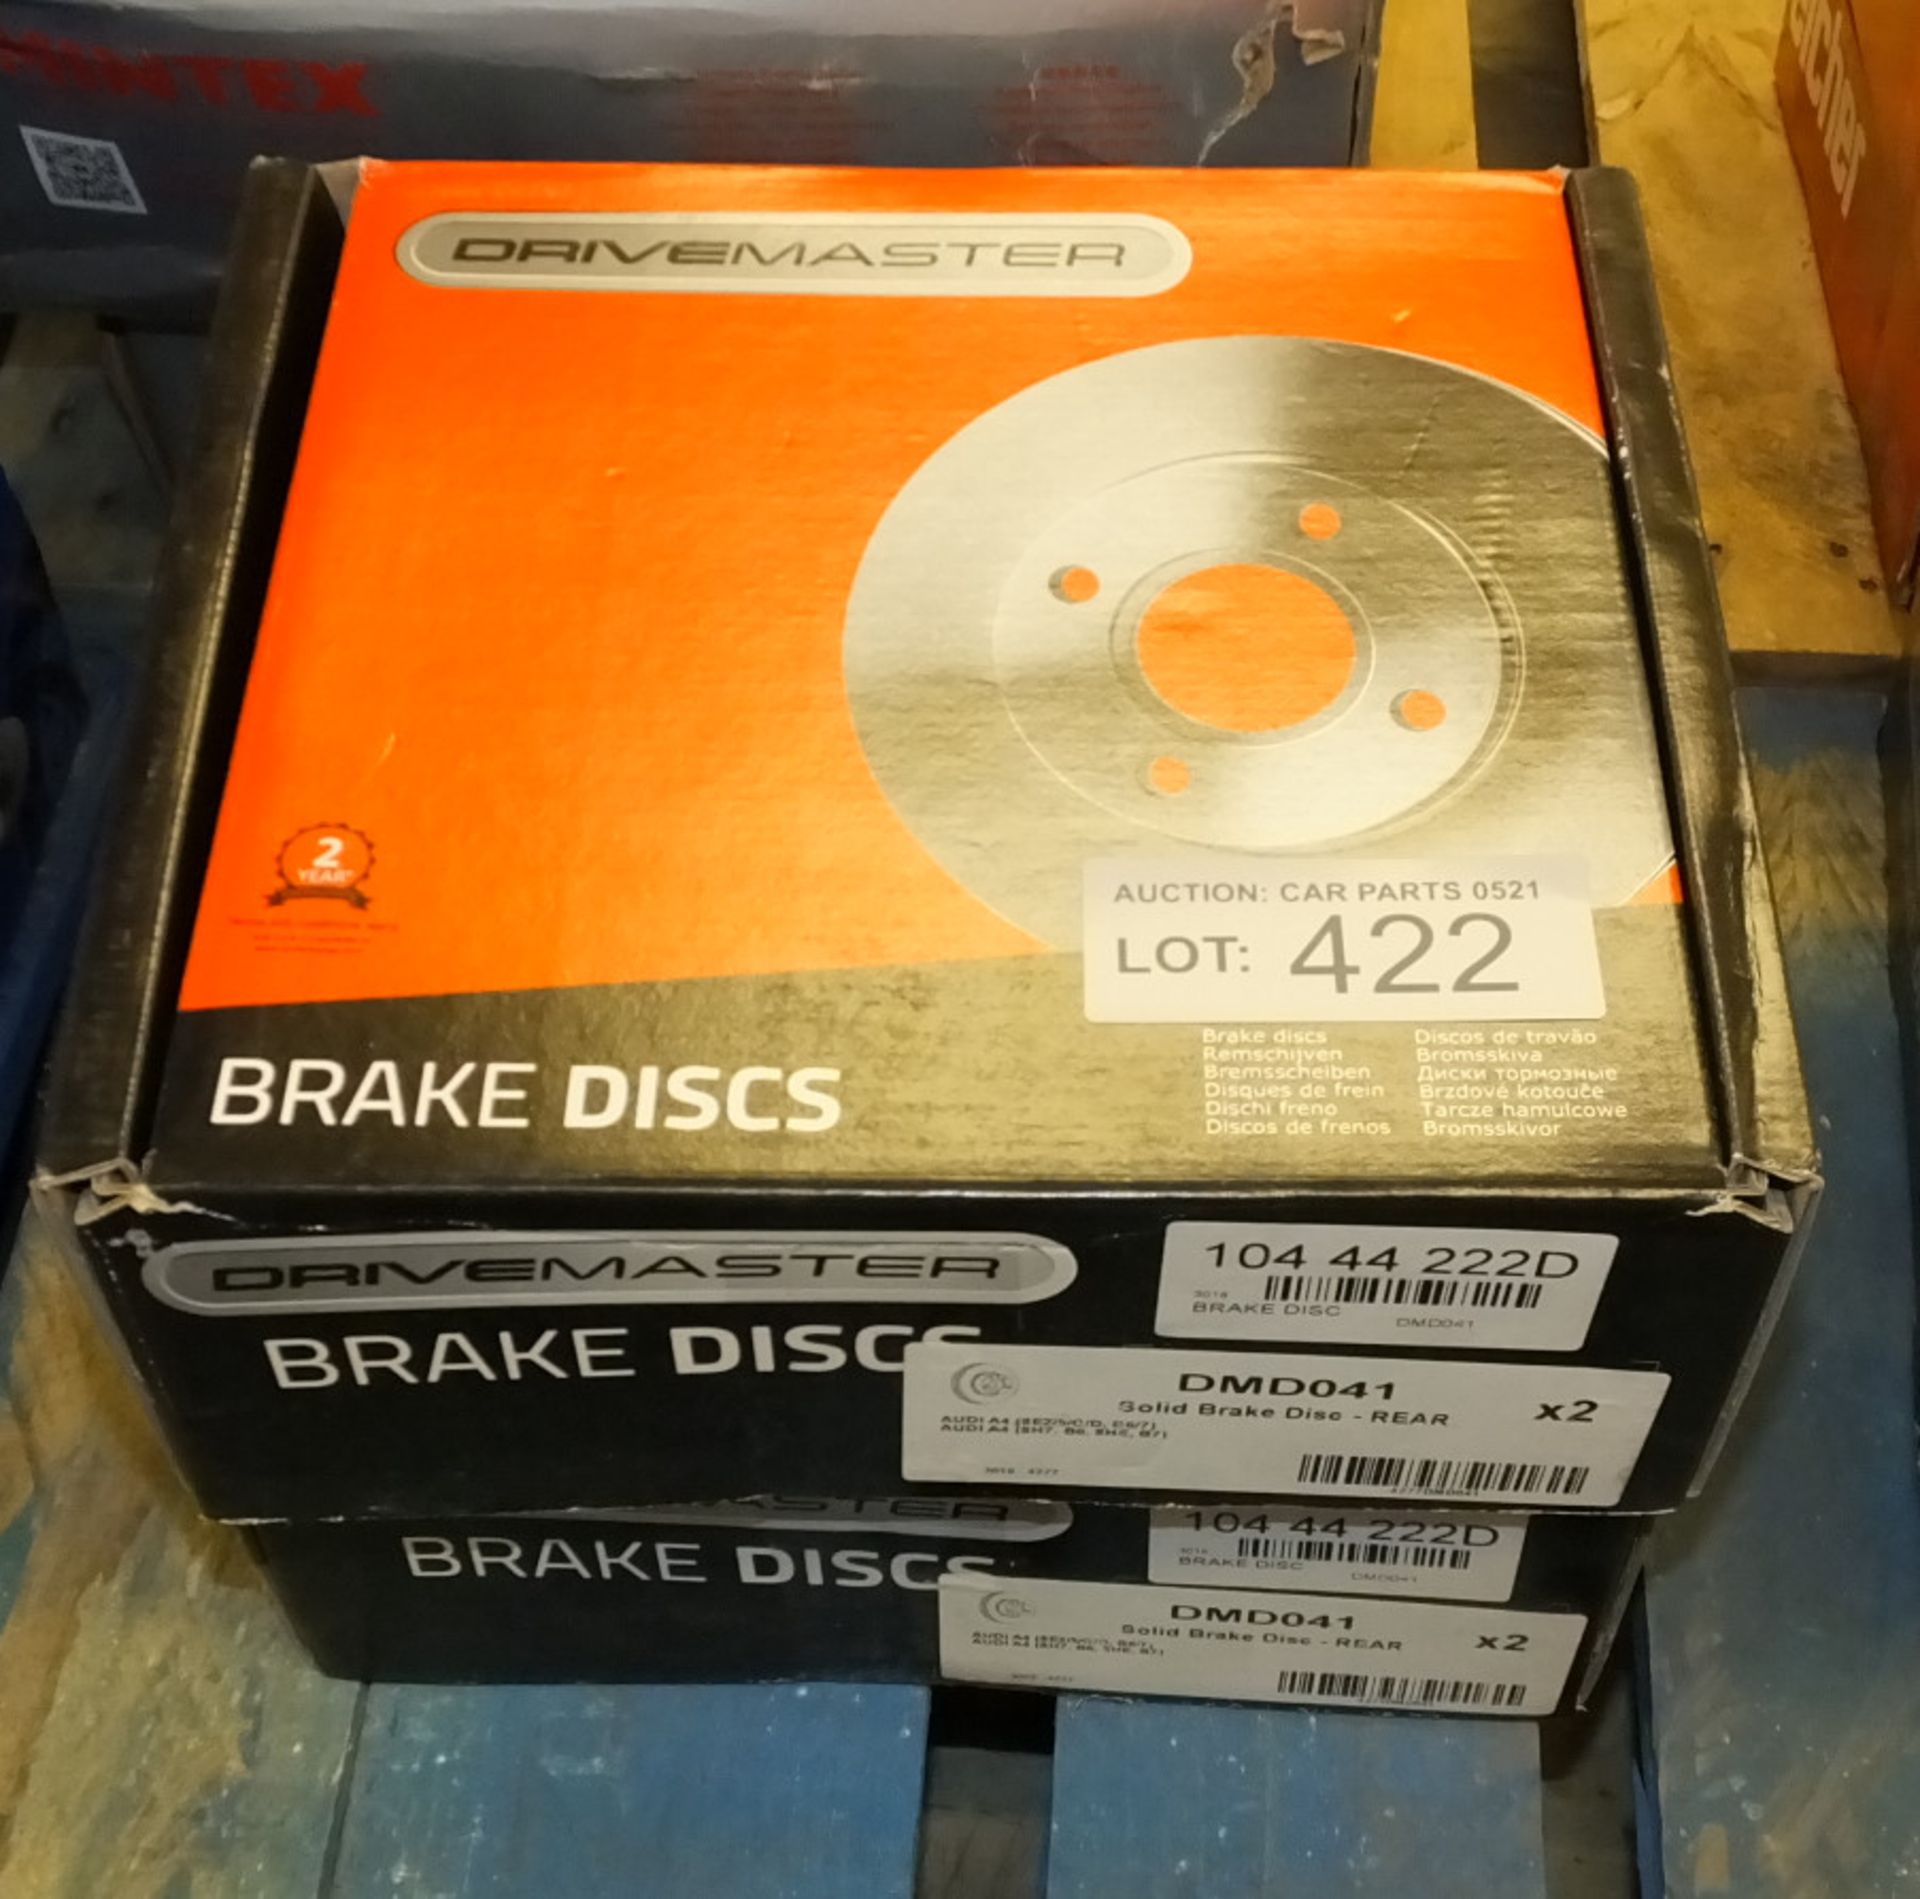 2x Drivemaster DMD041 Brake Disc Sets